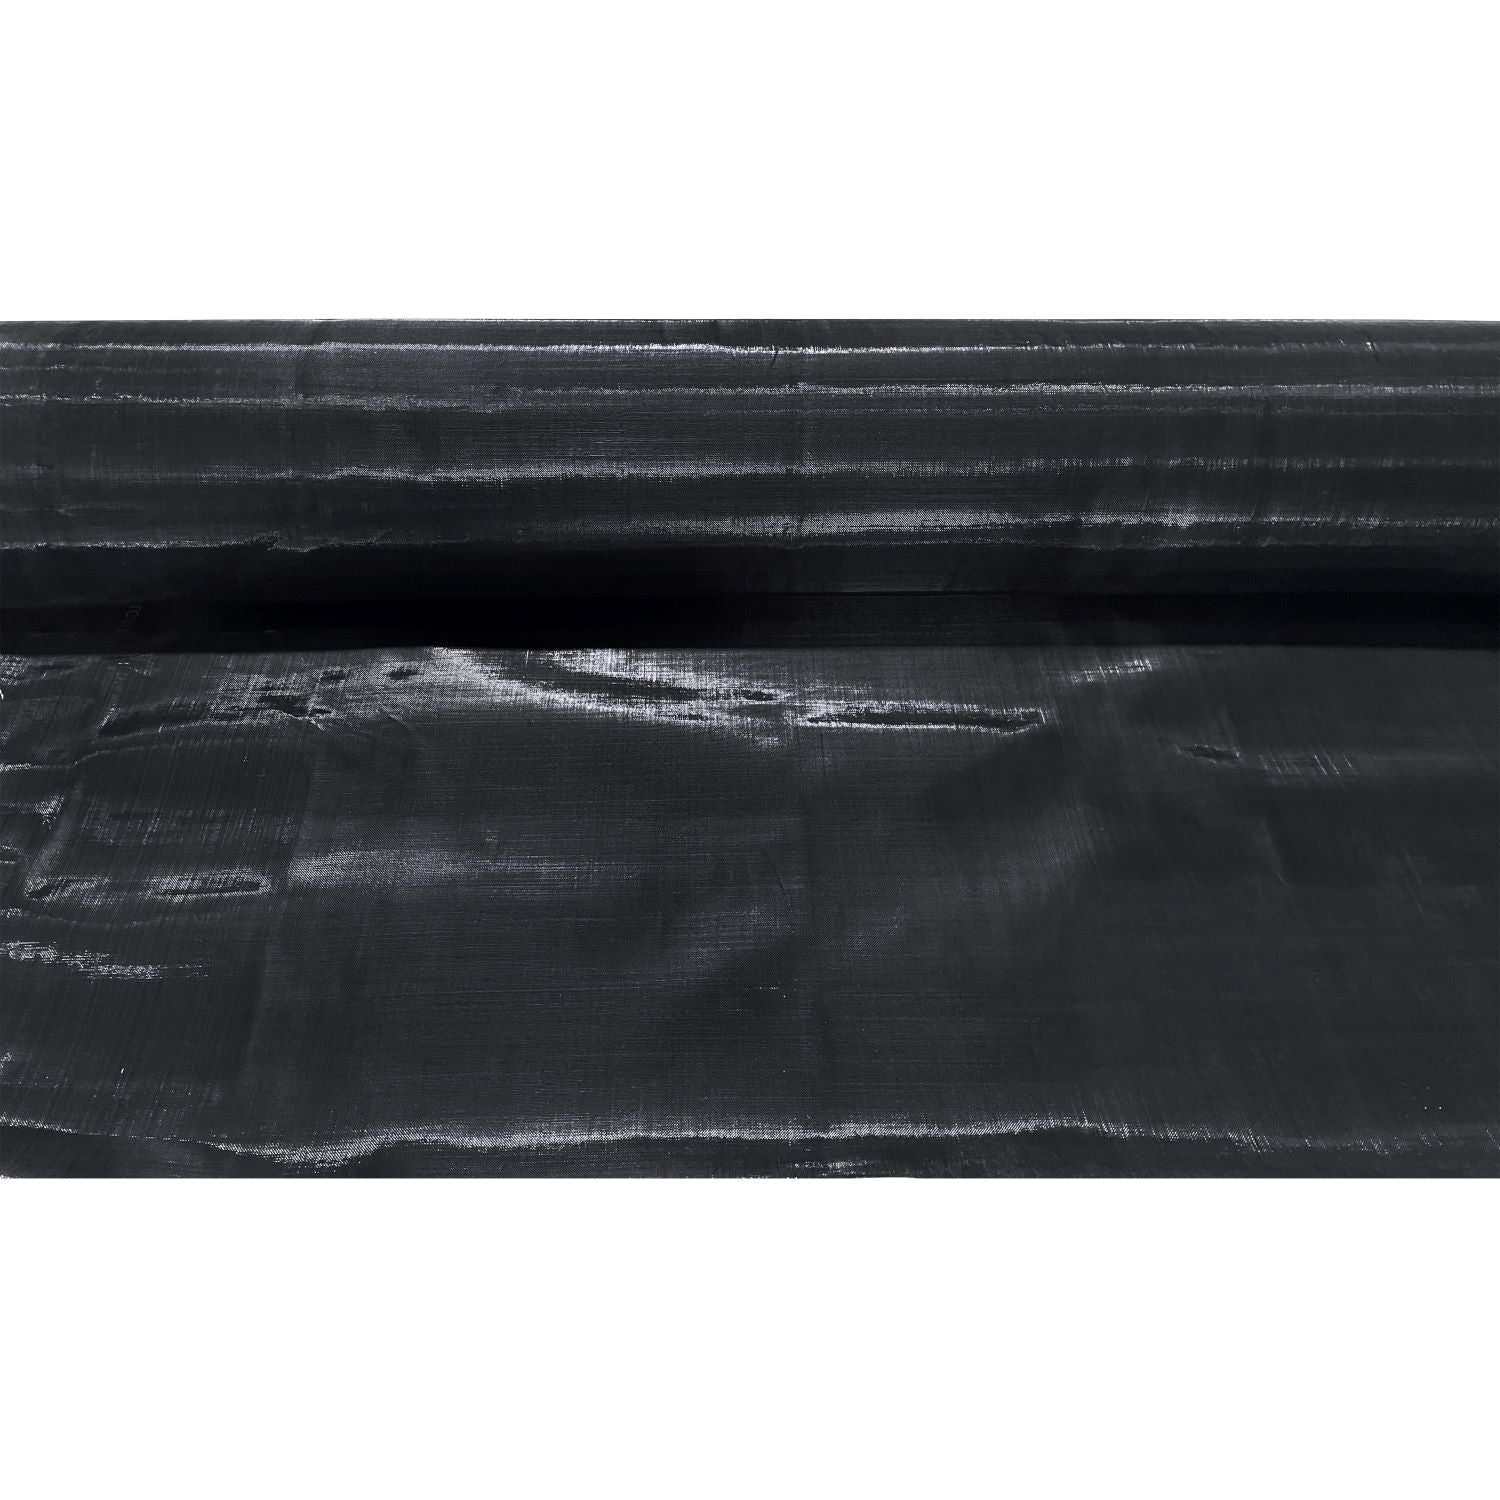 Jiffy Grip Black, Medium Weight Utility Fabric